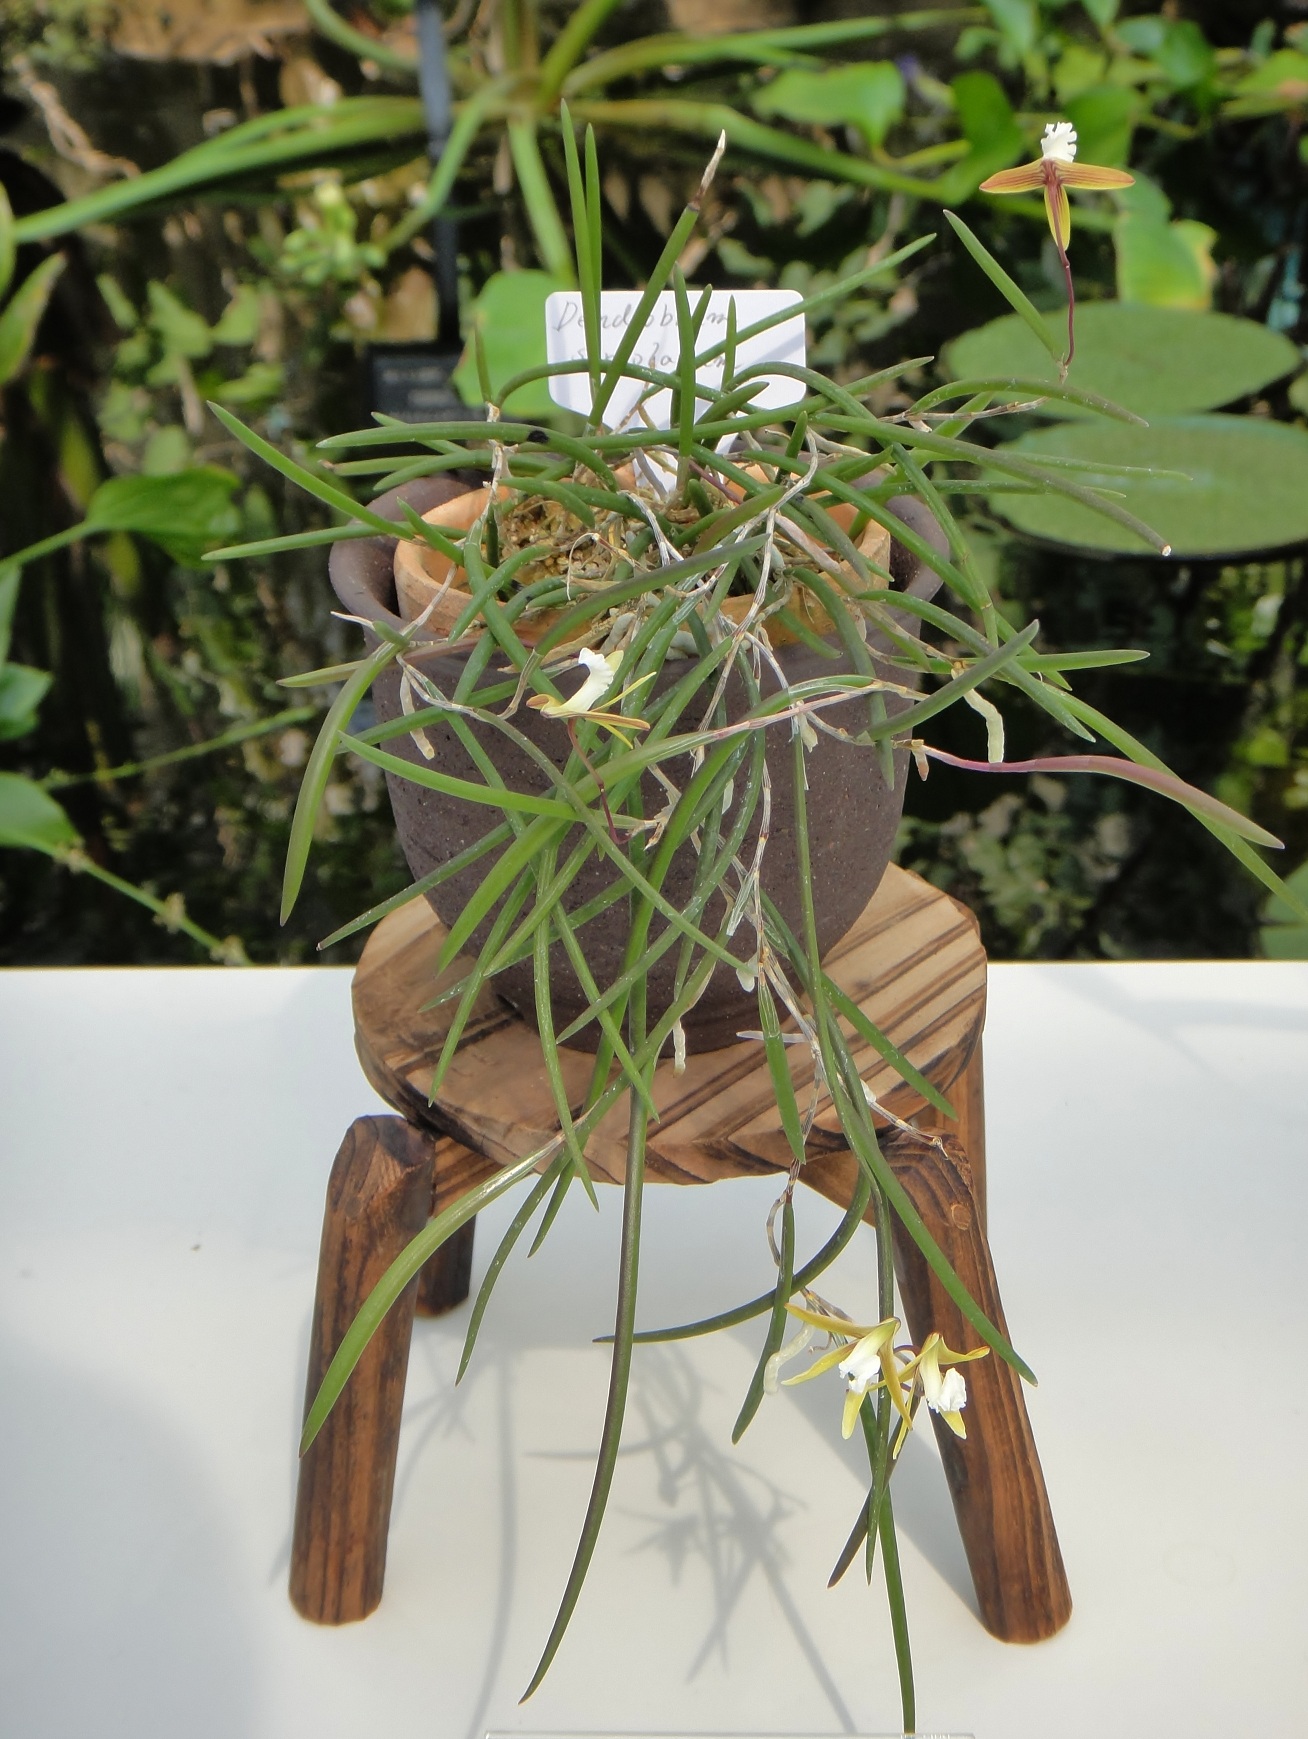 http://orchids.la.coocan.jp/Dendrobium/Dendrobium%20striolatum/DSC03630.JPG